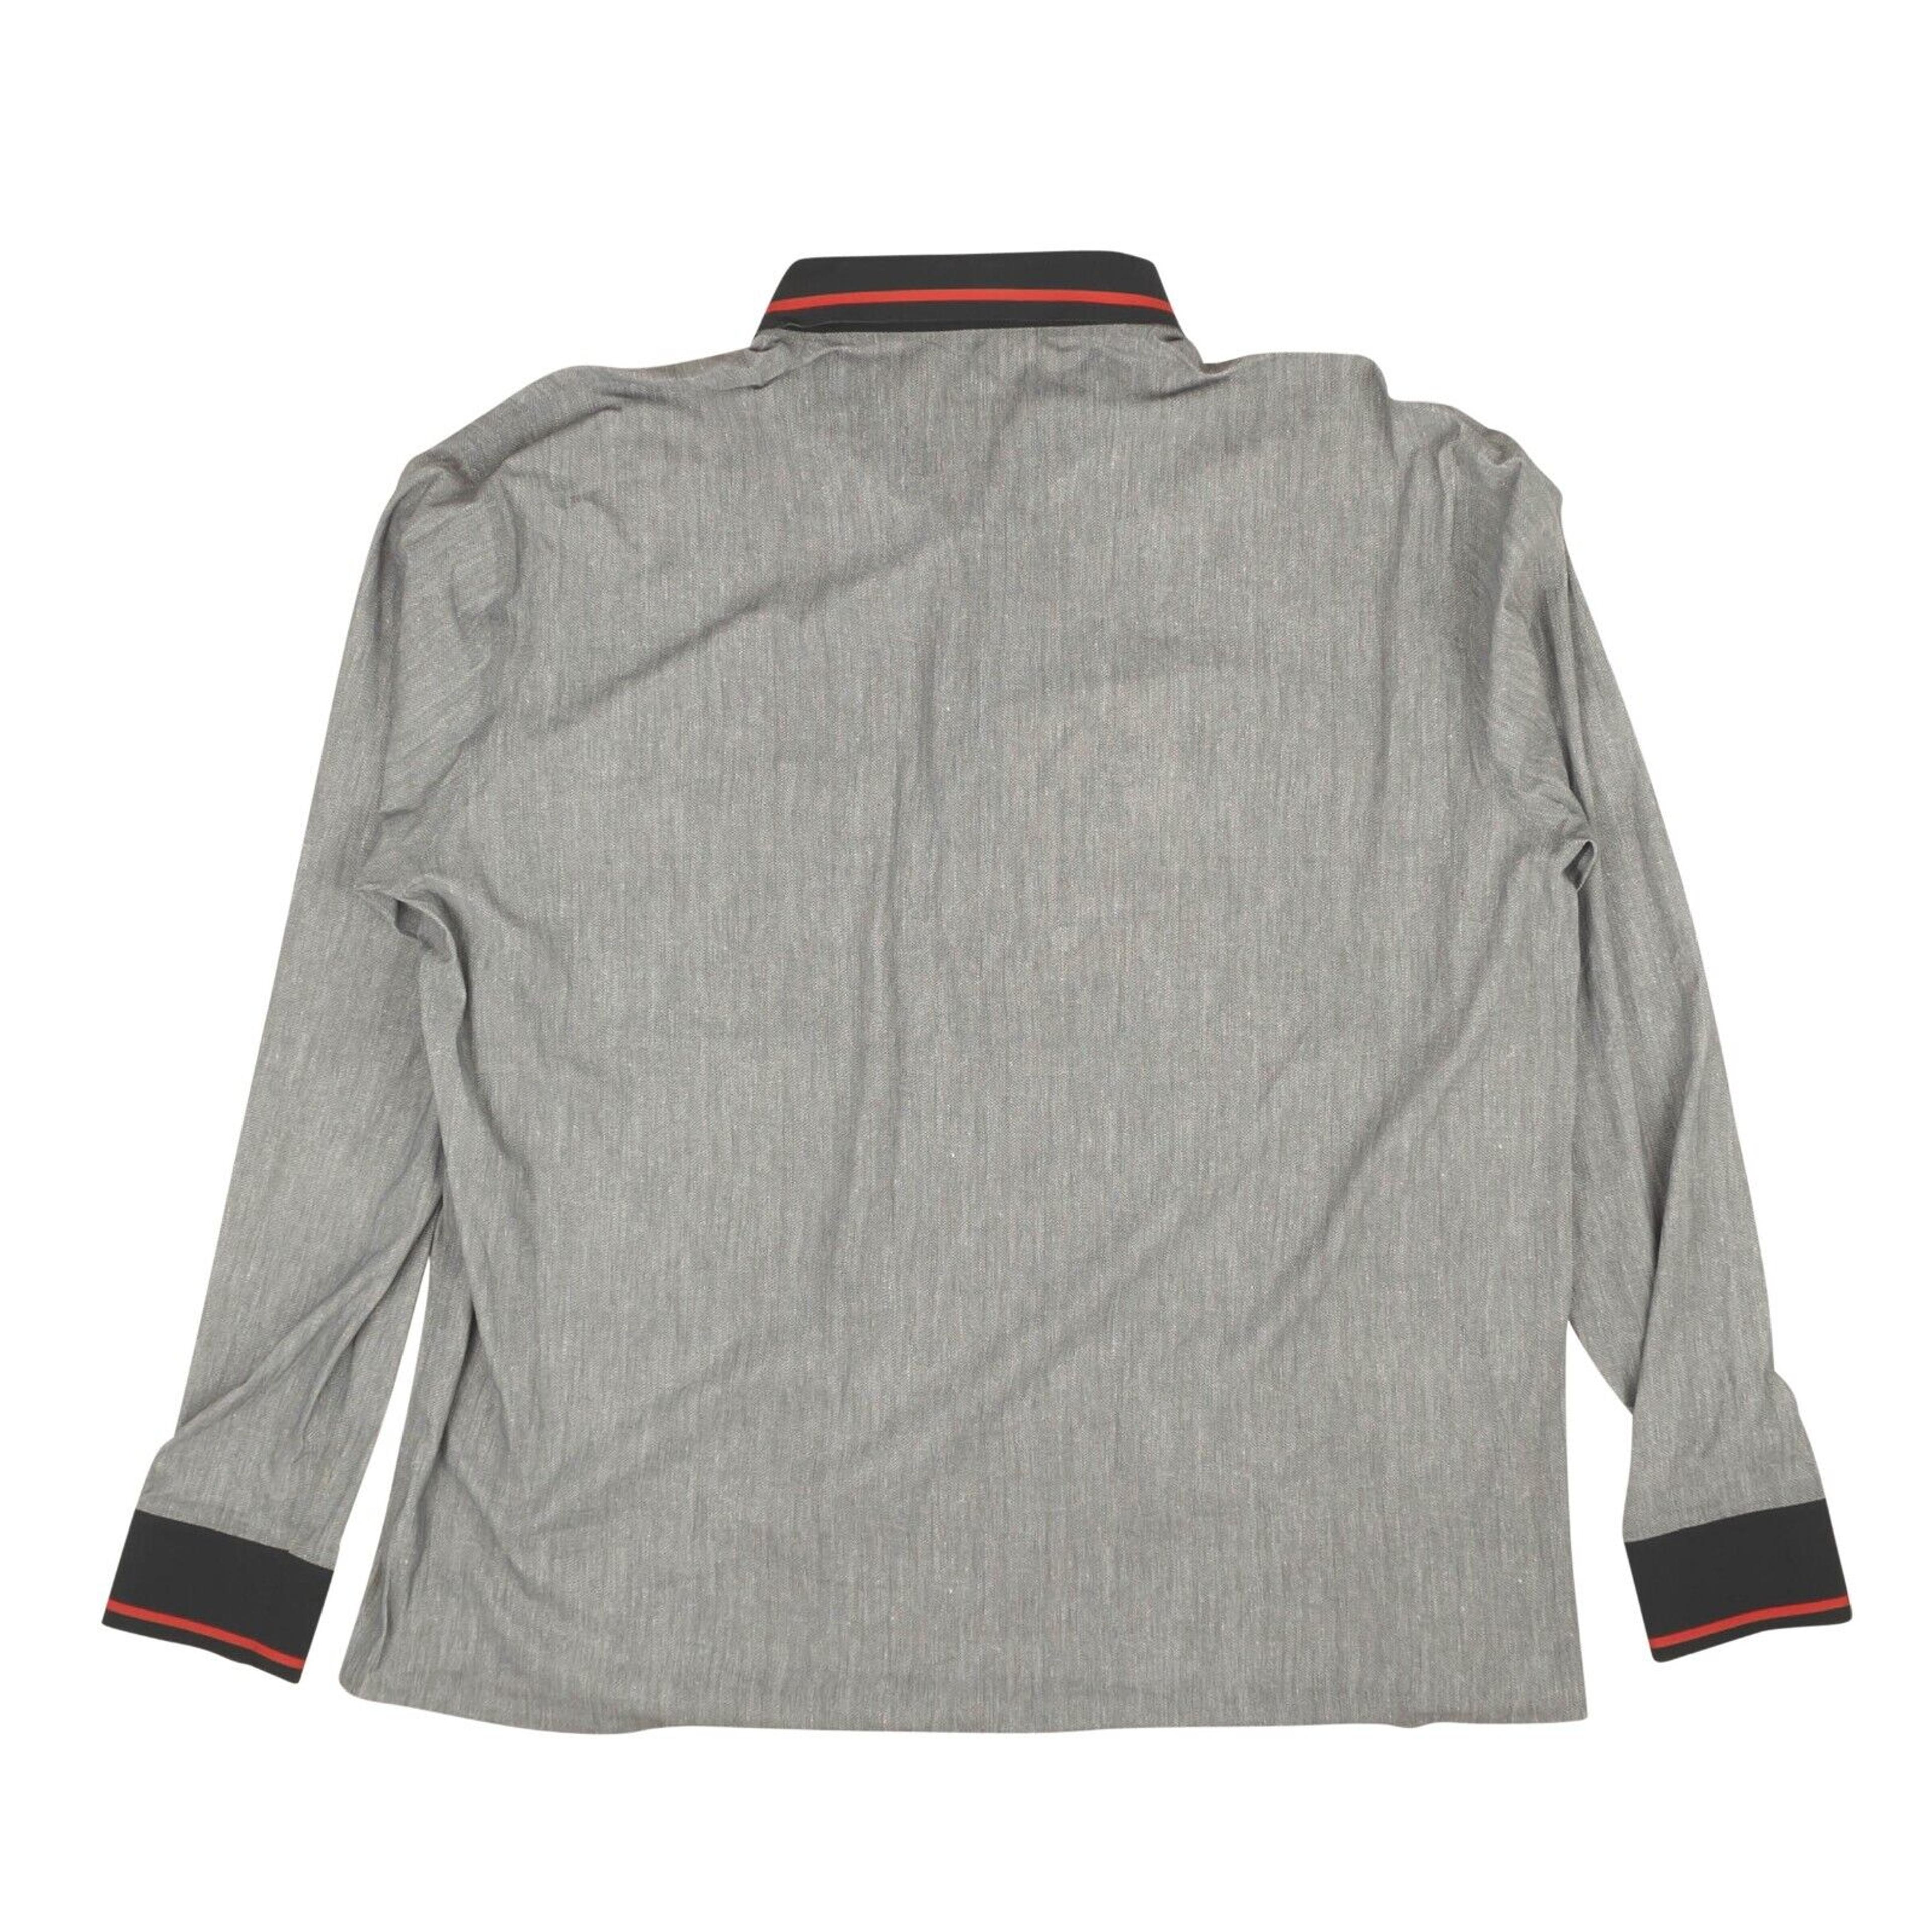 Alternate View 2 of Grey Imitation Taped Polo Shirt